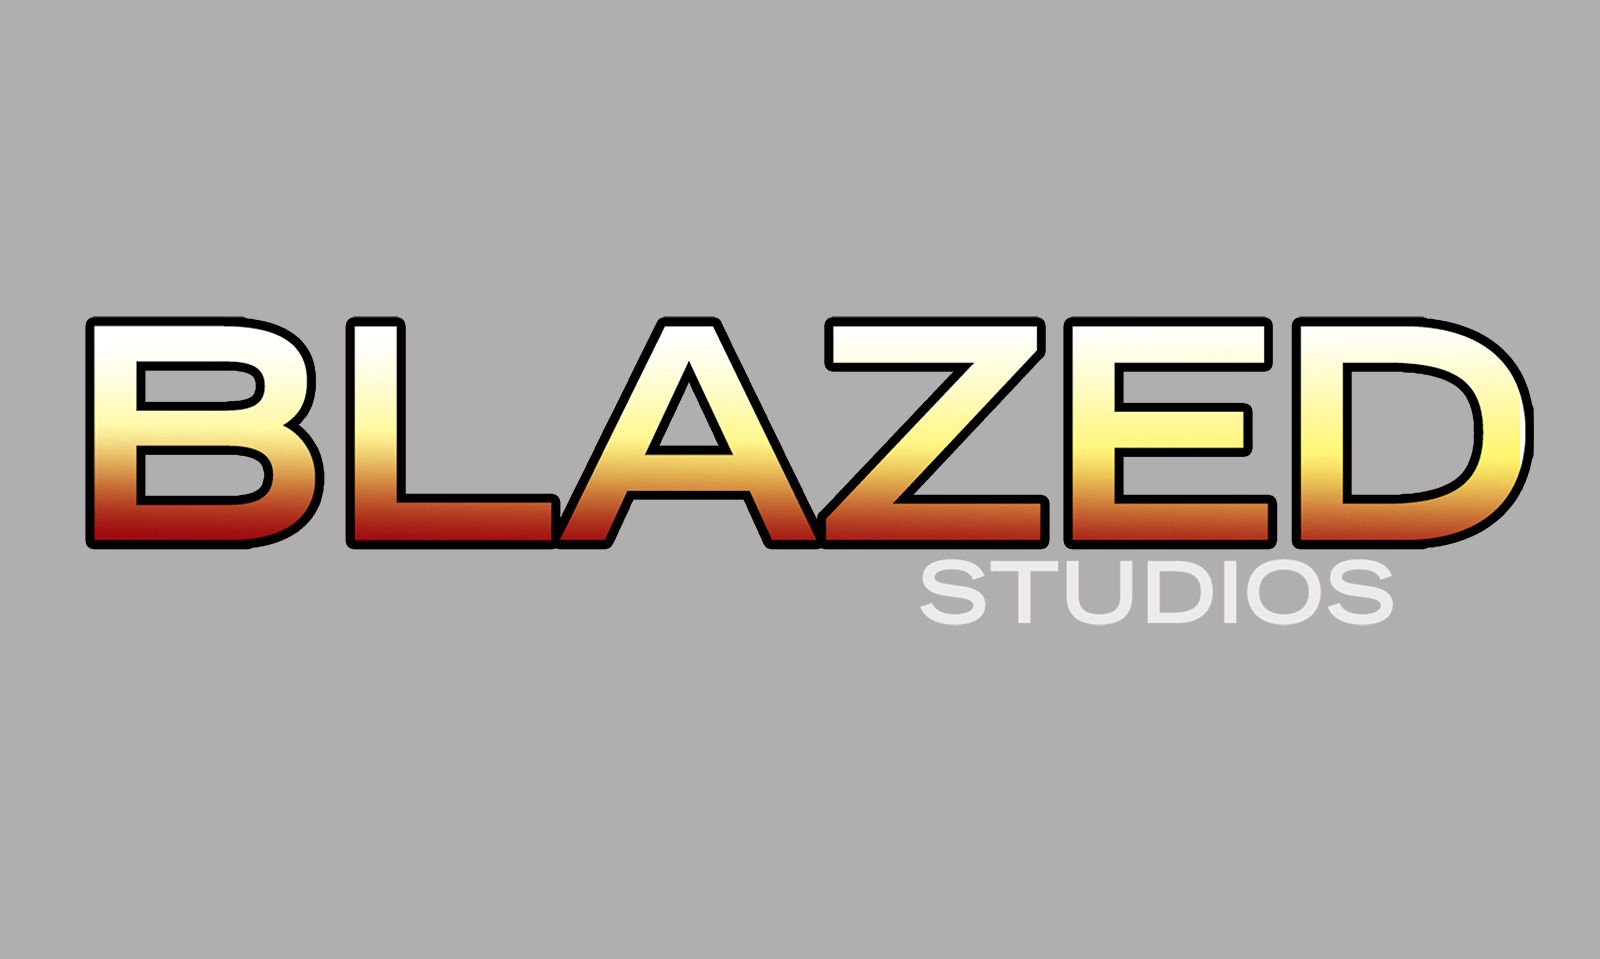 Blazed Studios Set to Exhibit at Exxxotica New Jersey